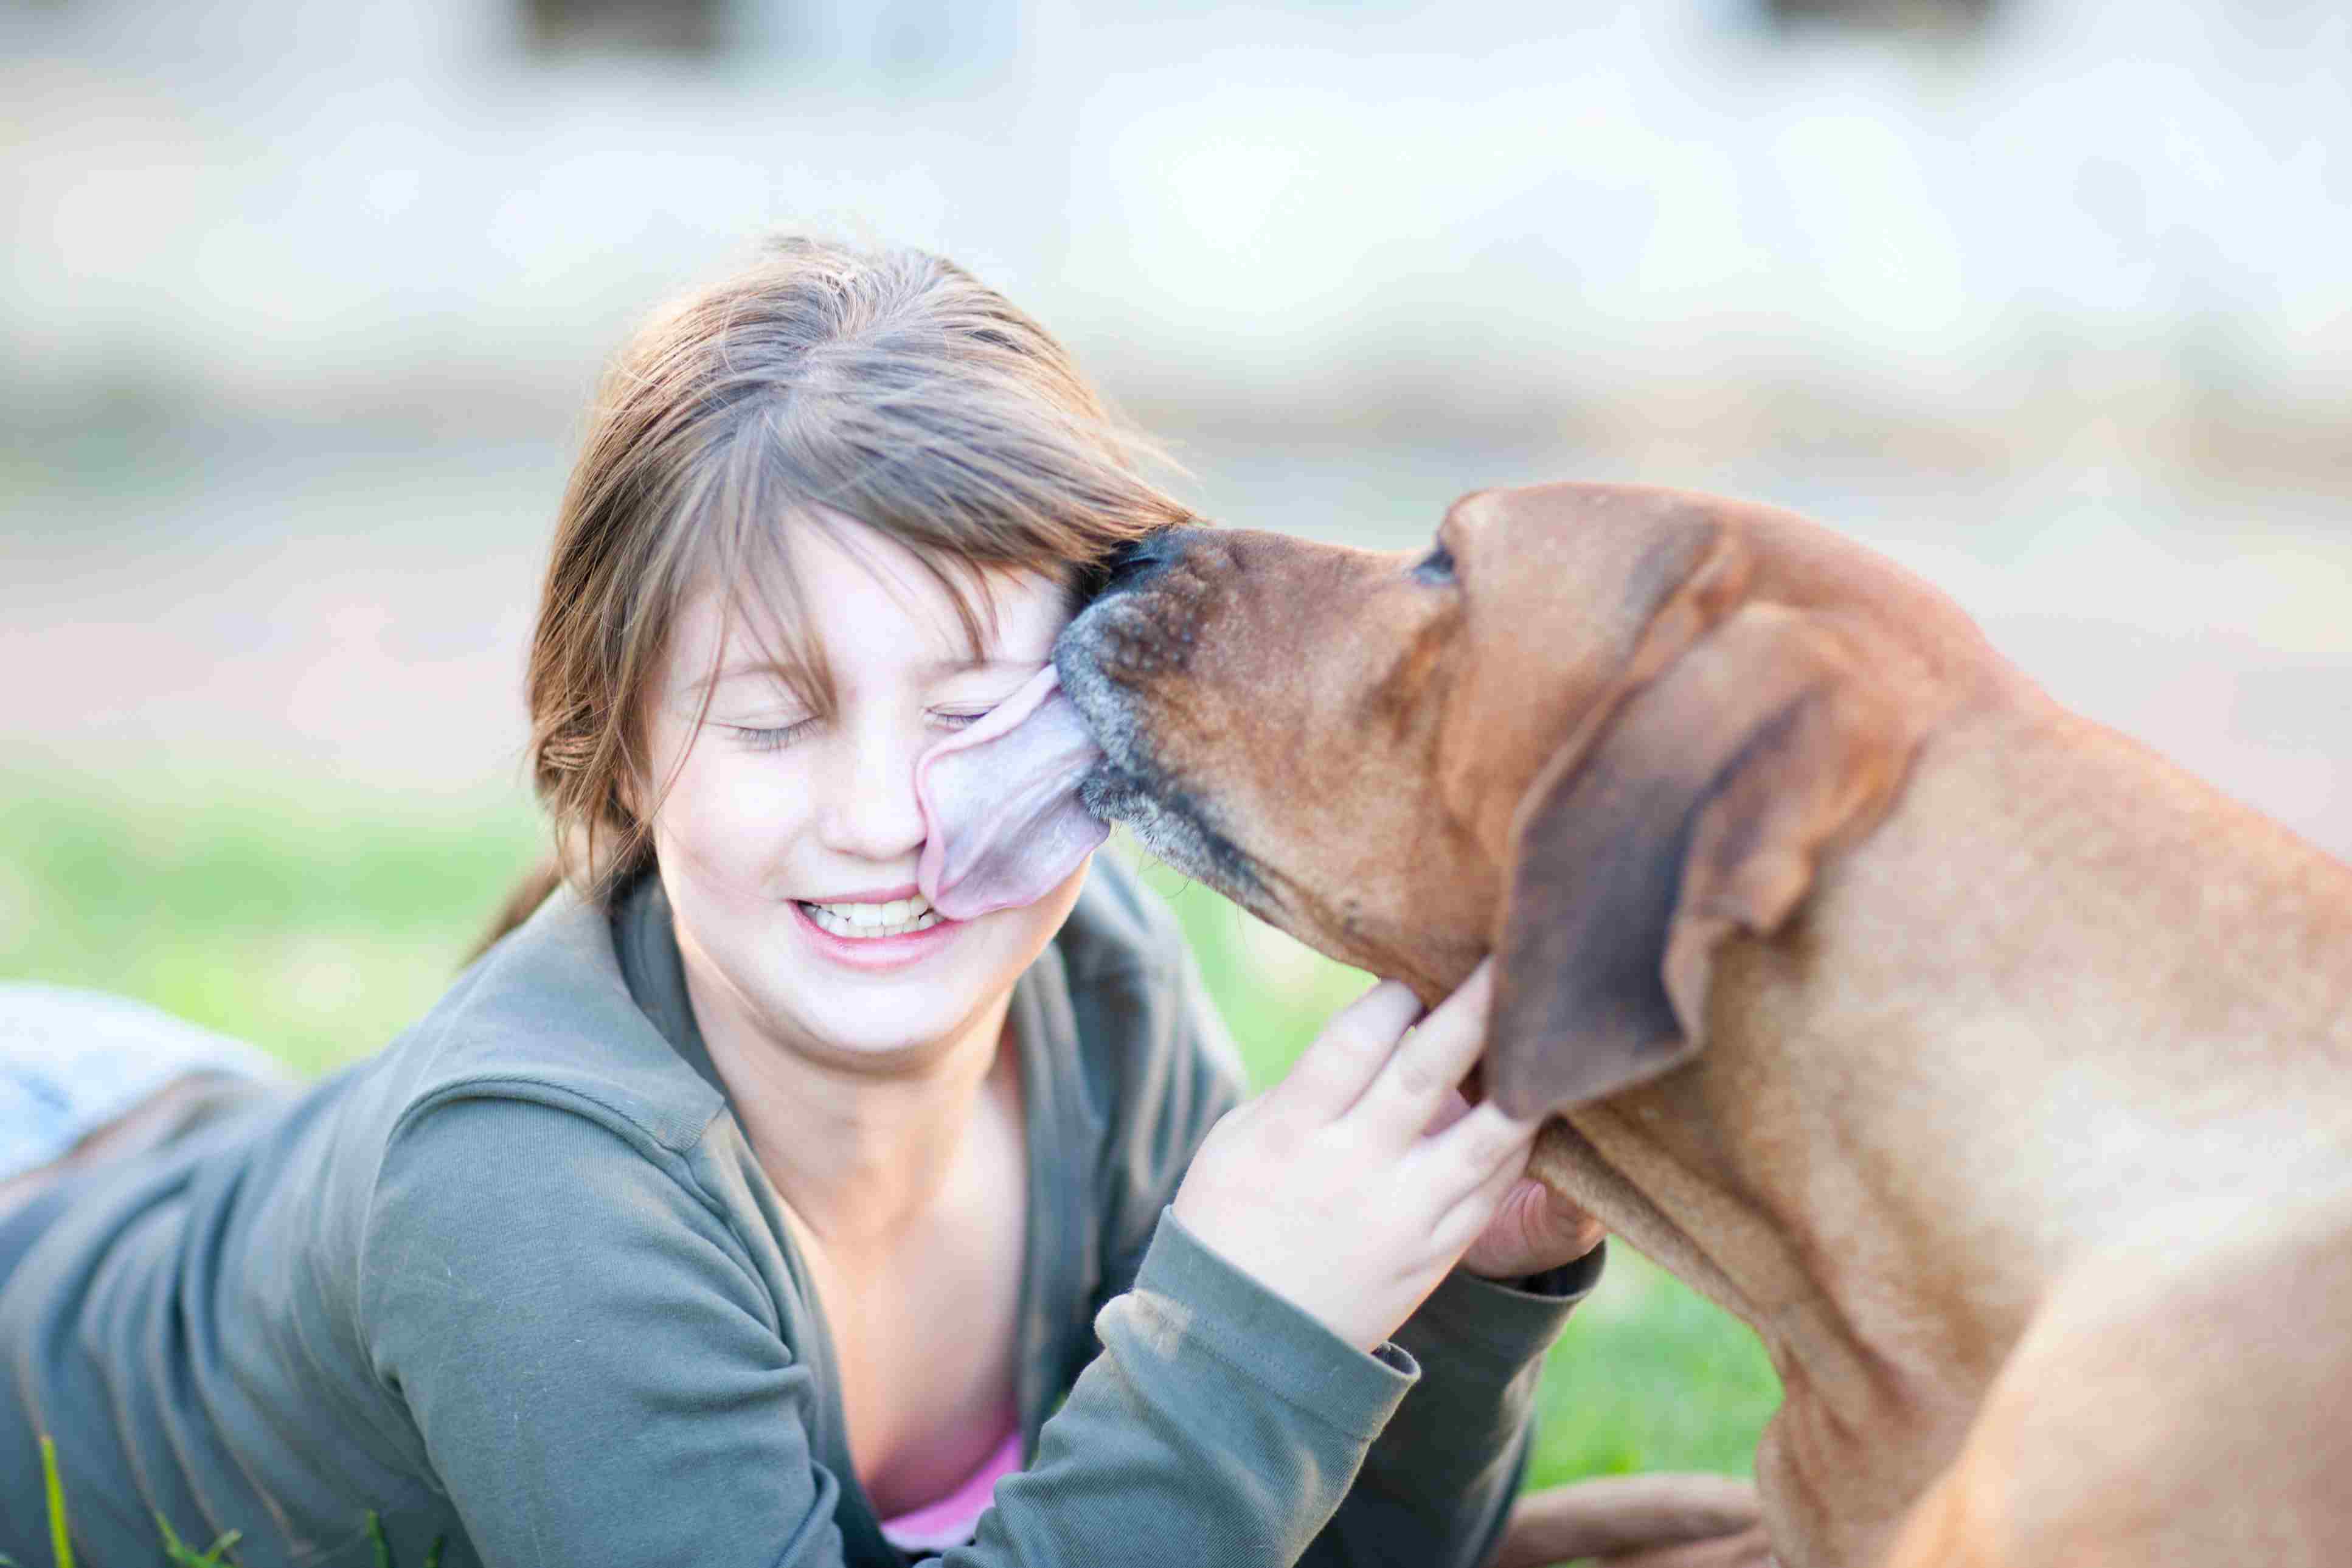 A dog licking a girl's face